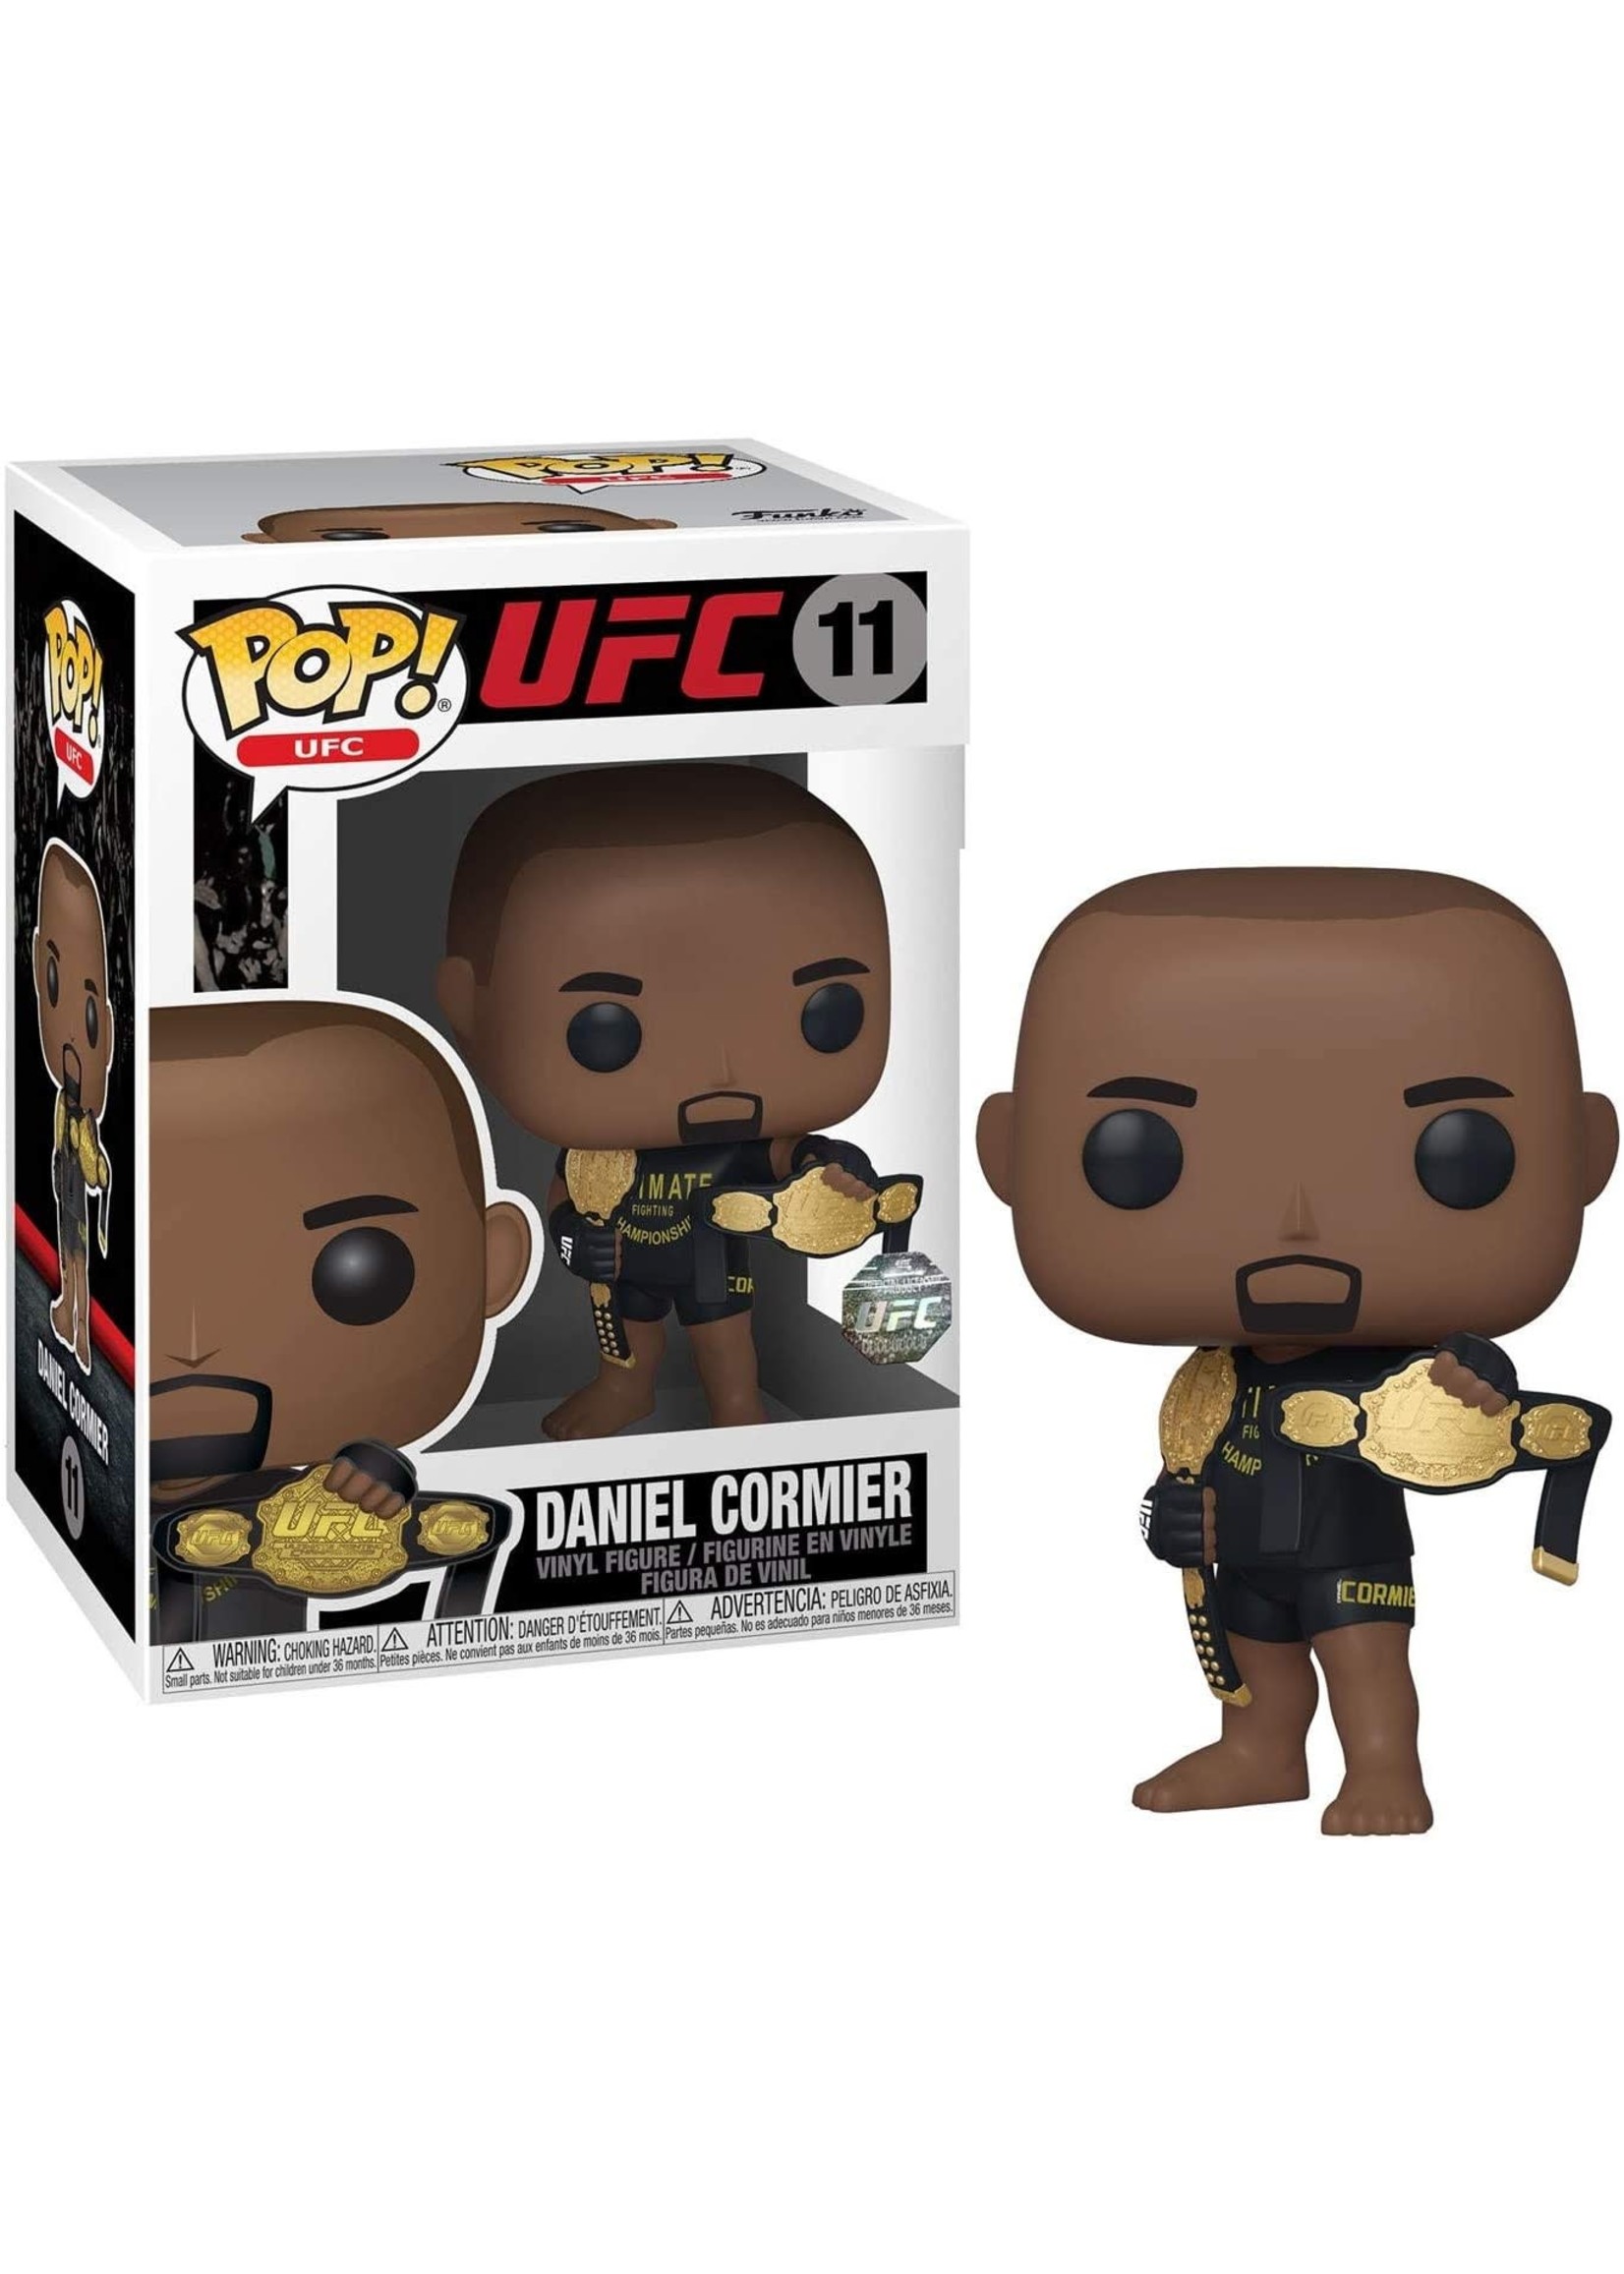 Funko UFC 11 Daniel Cormier